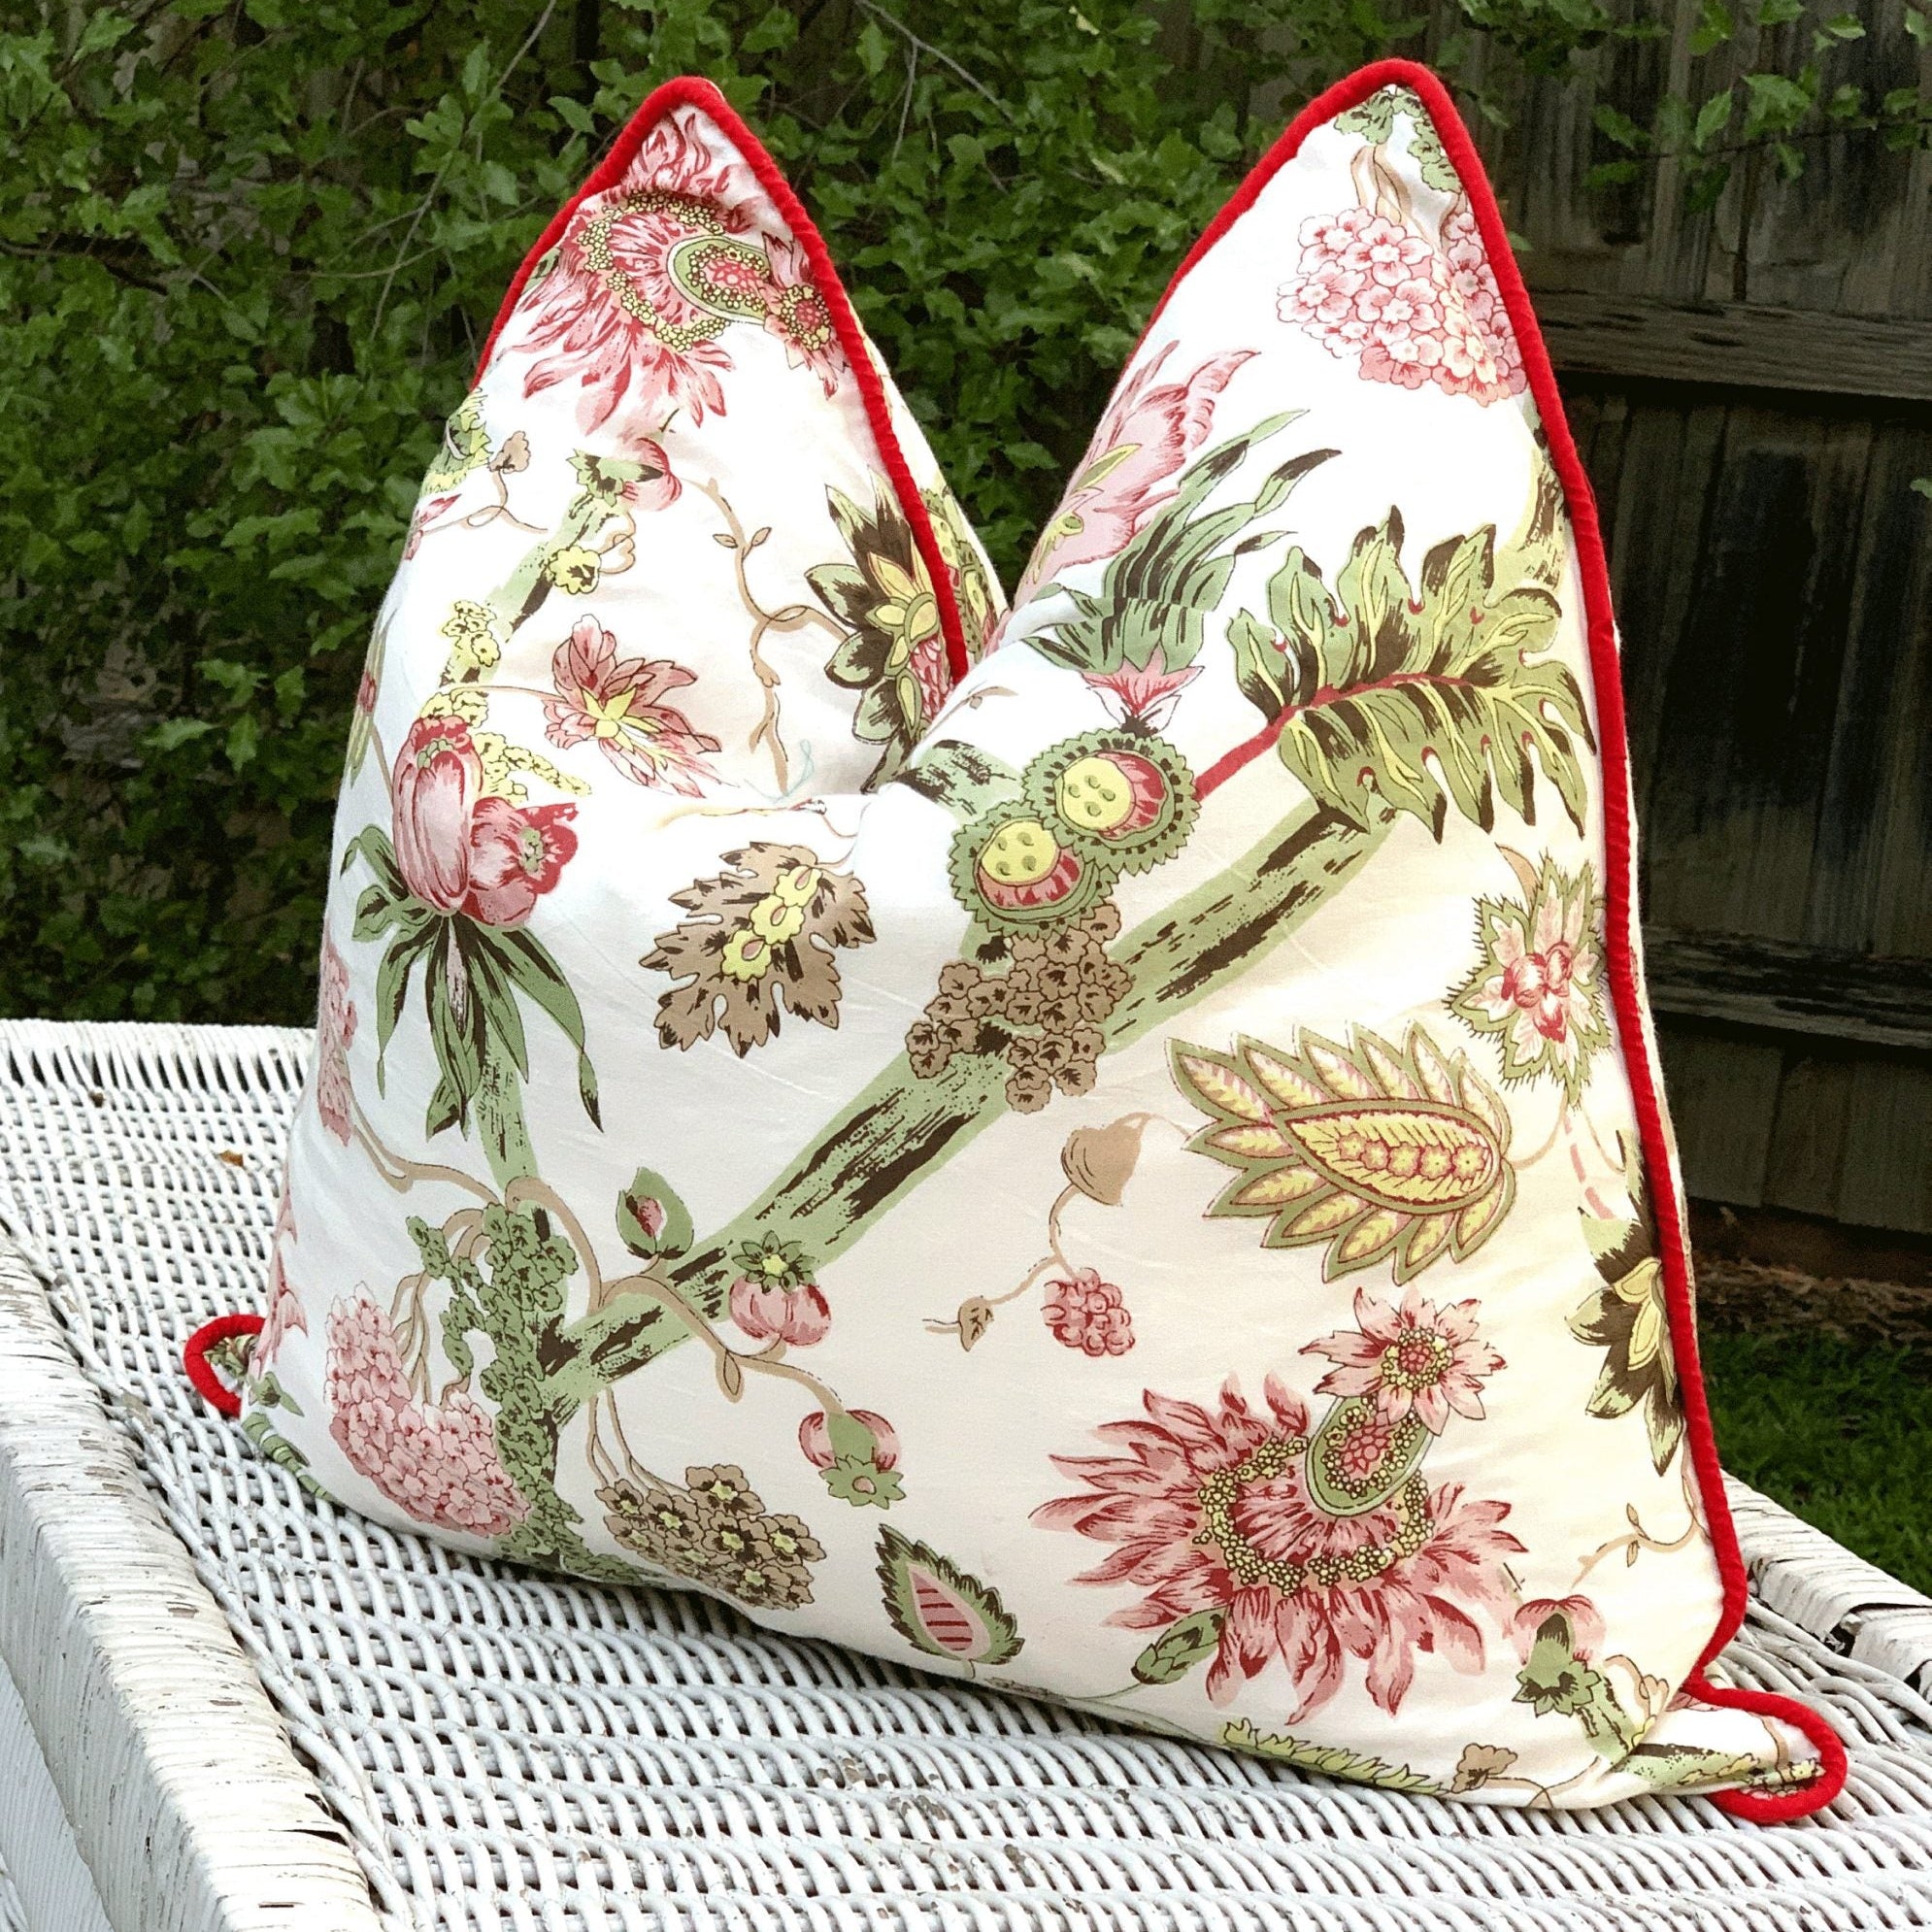 'Restful Refuge' 100% Handmade Cotton Cushion Cover